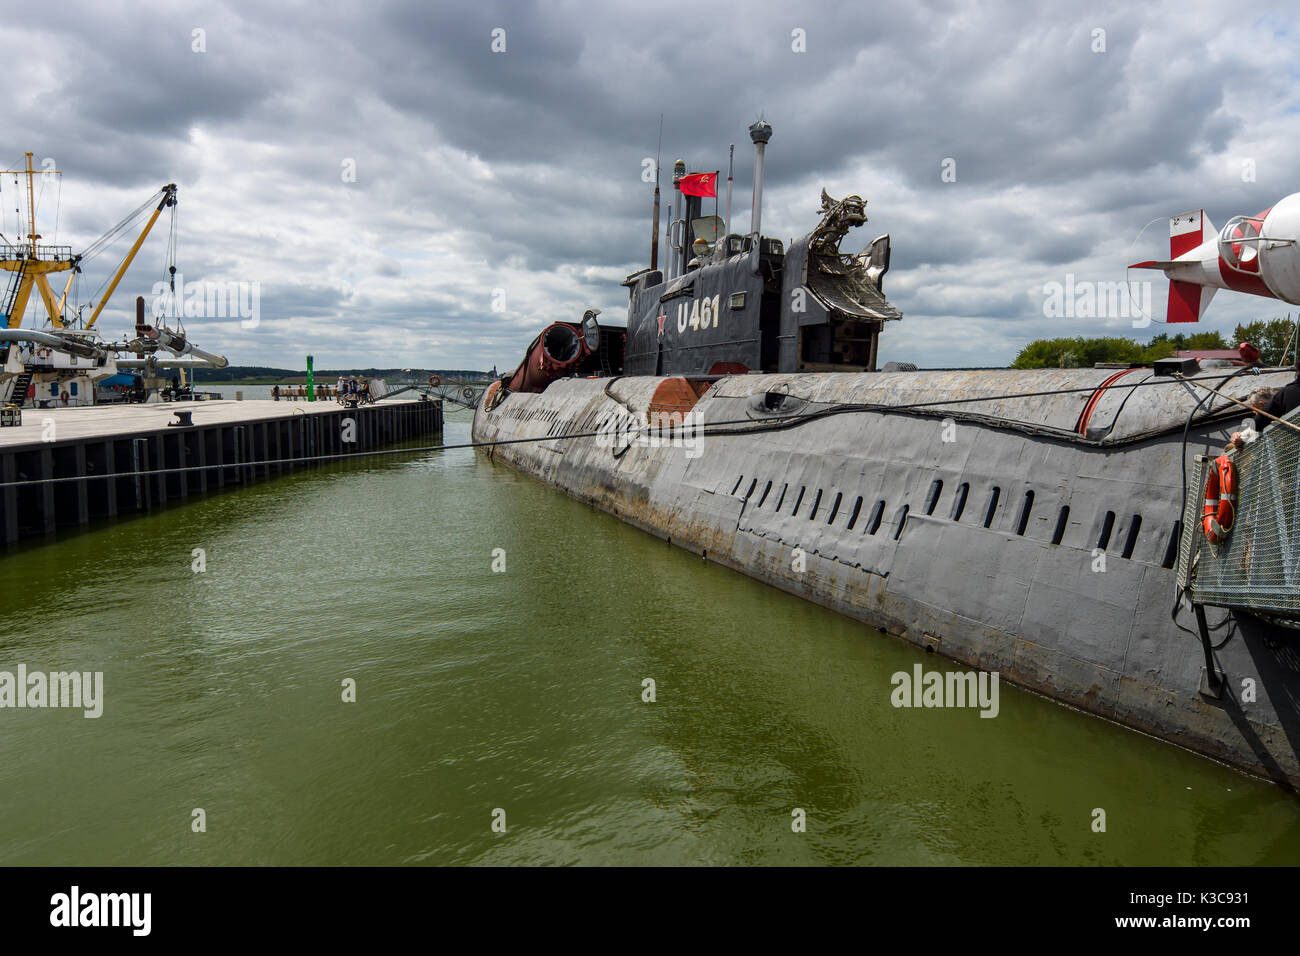 PEENEMUENDE, GERMANY - JULY 18, 2017: The Peenemuende seaport on the Baltic Sea island of Usedom and the Soviet Juliett-class submarine K-24 (U461). Stock Photo